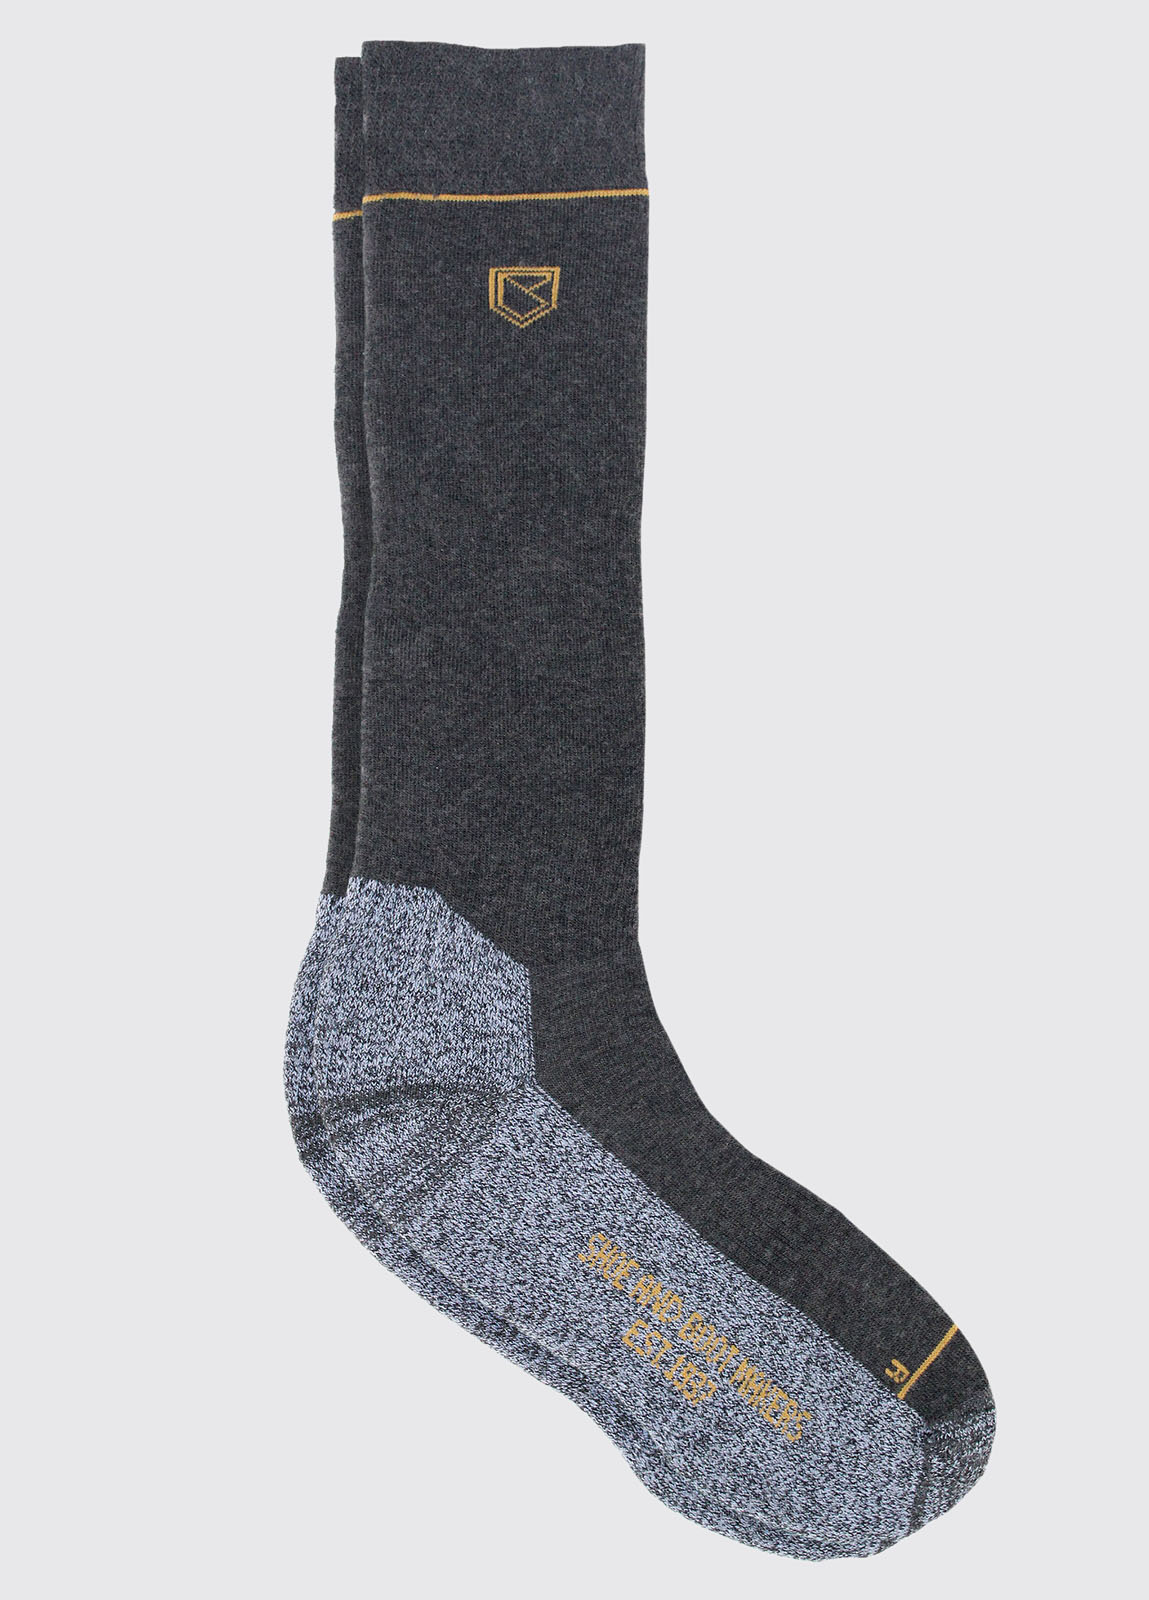 Kilrush Socks - Graphite